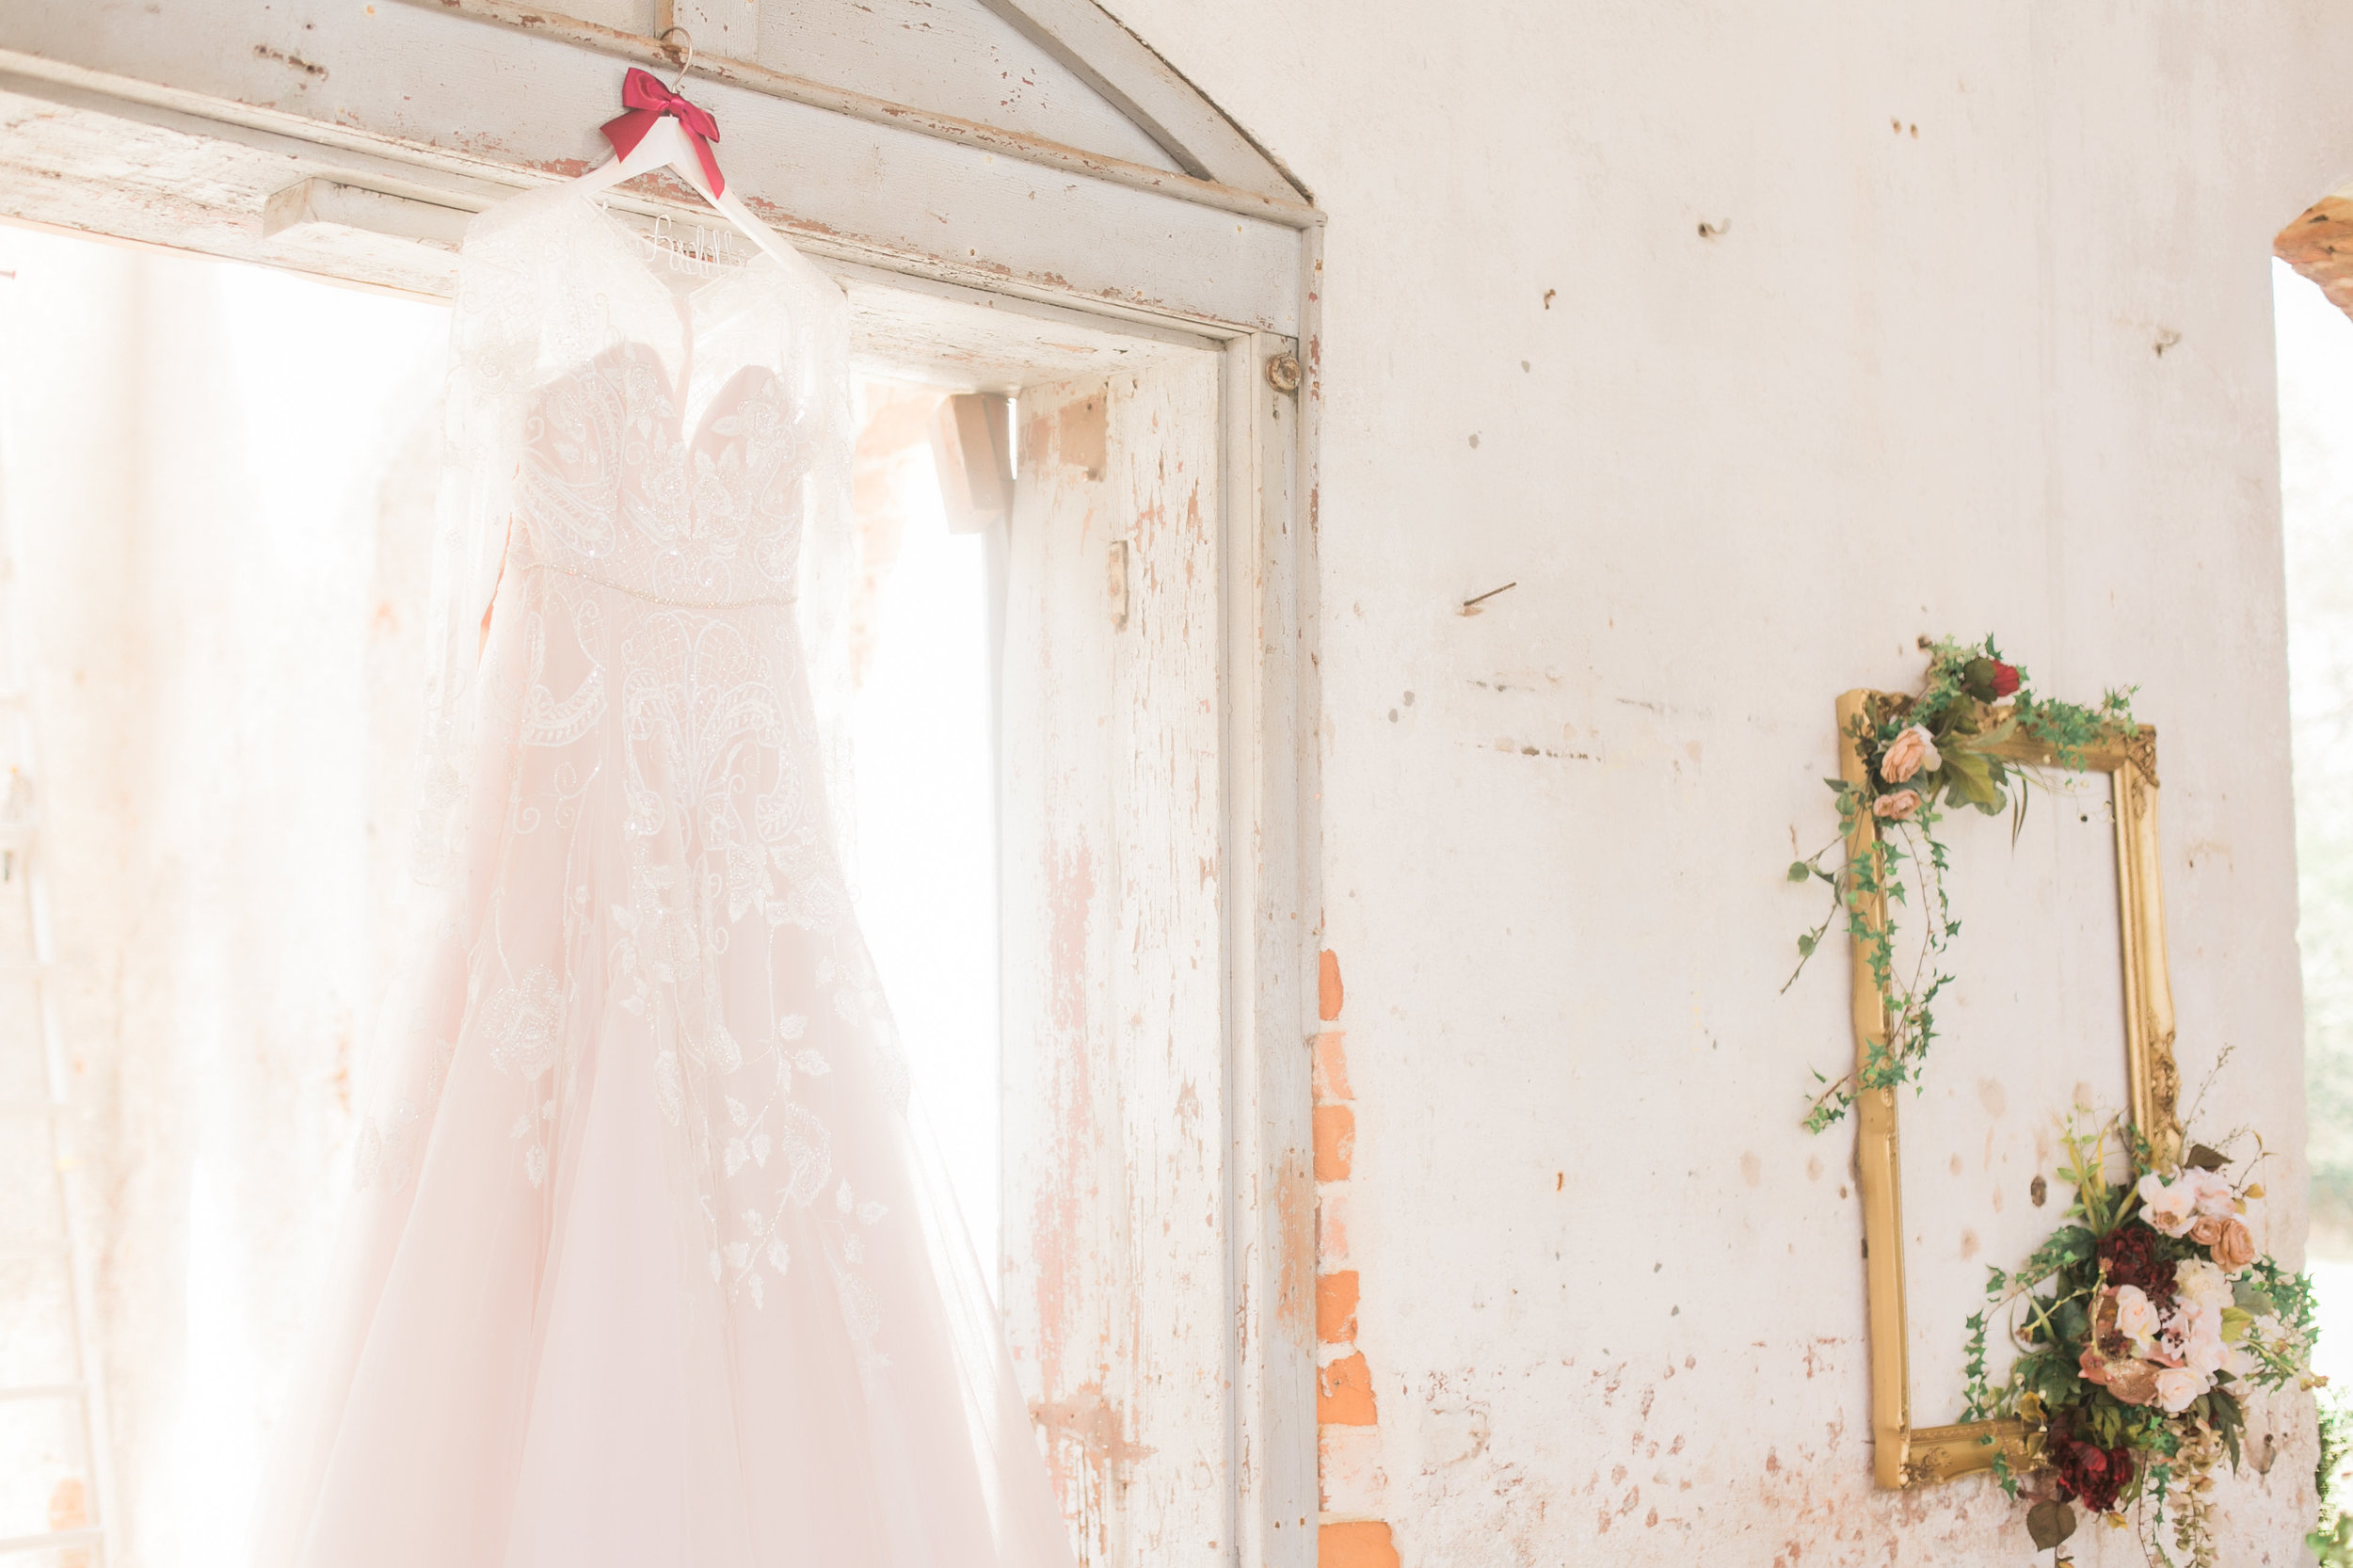 North Carolina Providence Cotton Mill Wedding — Vintage Wedding Decor Details - The Overwhelmed Bride Wedding Blog